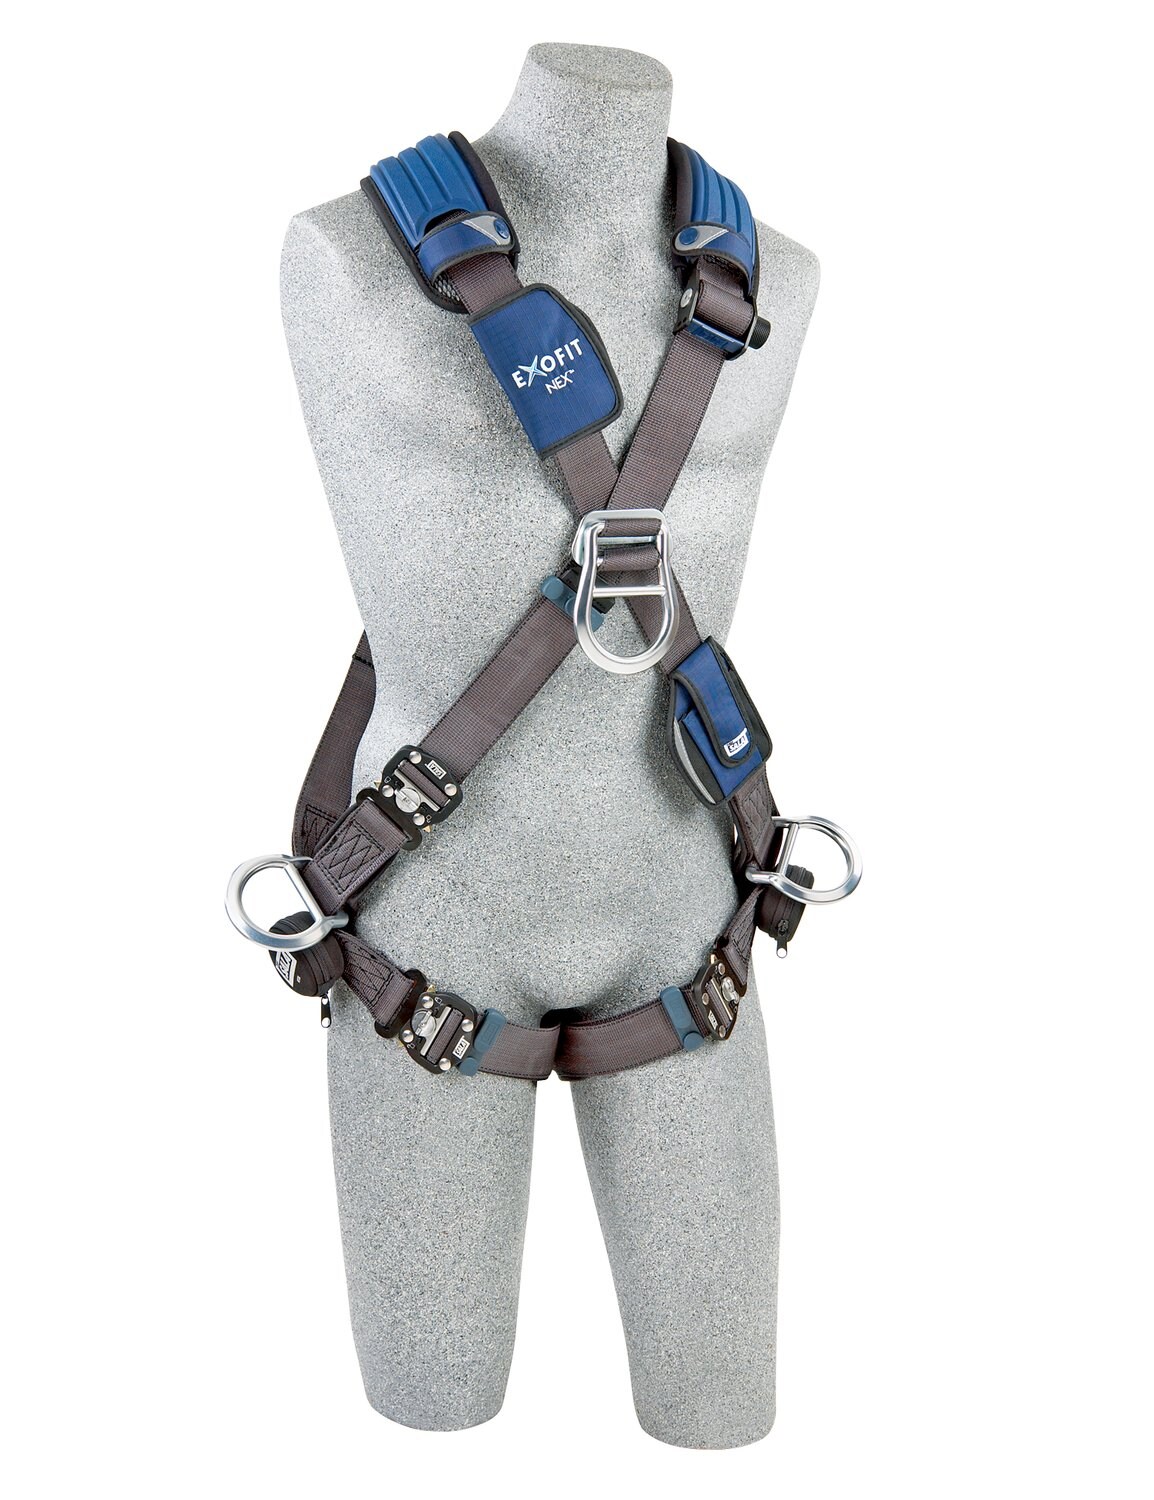 7012816193 - 3M DBI-SALA ExoFit NEX Comfort Cross-Over Climbing/Positioning Safety Harness 1113106, Small